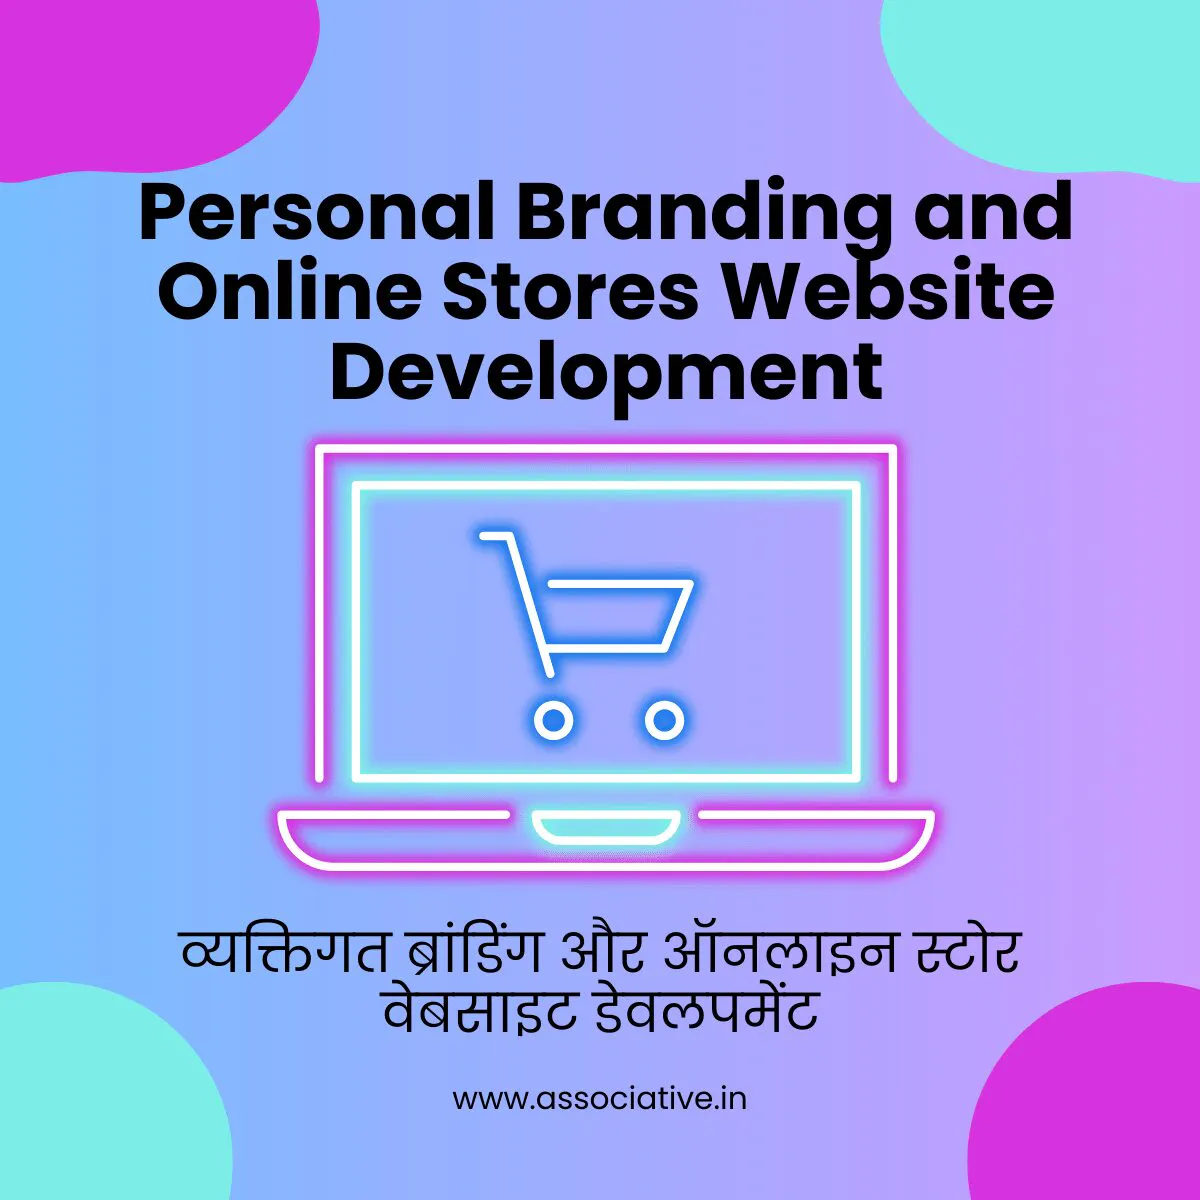 Personal Branding and Online Stores Website Development